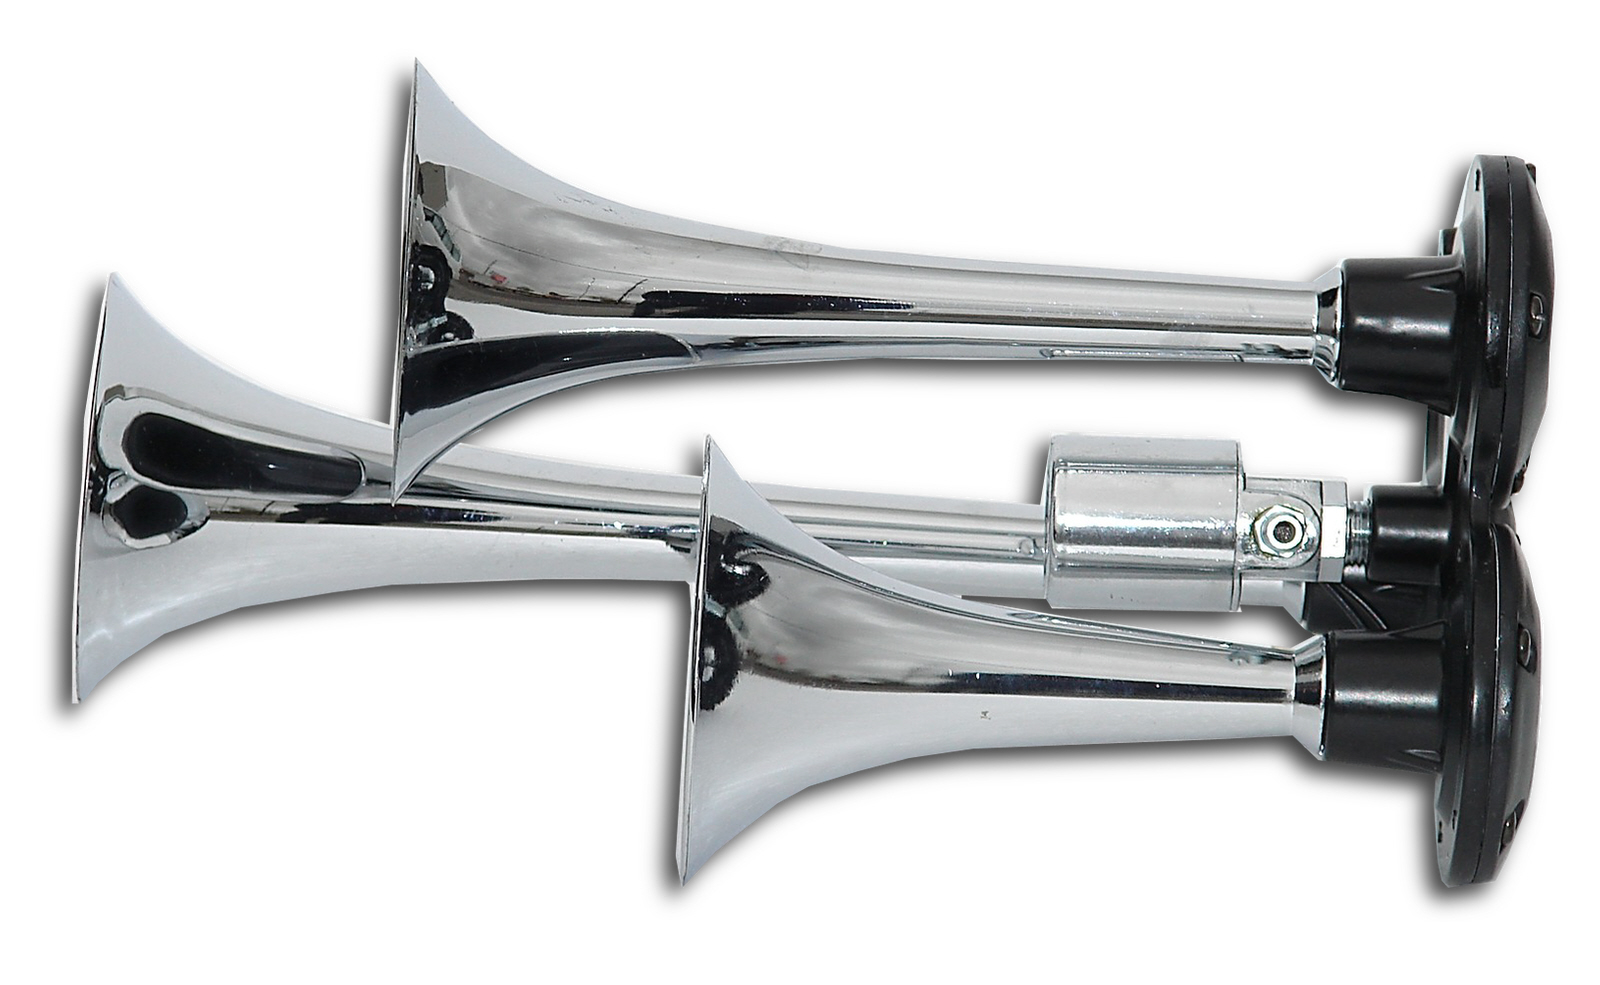 Triple Trumpet Horn 140db - Viair 20003 120psi Air Compressor 1.5g Kit